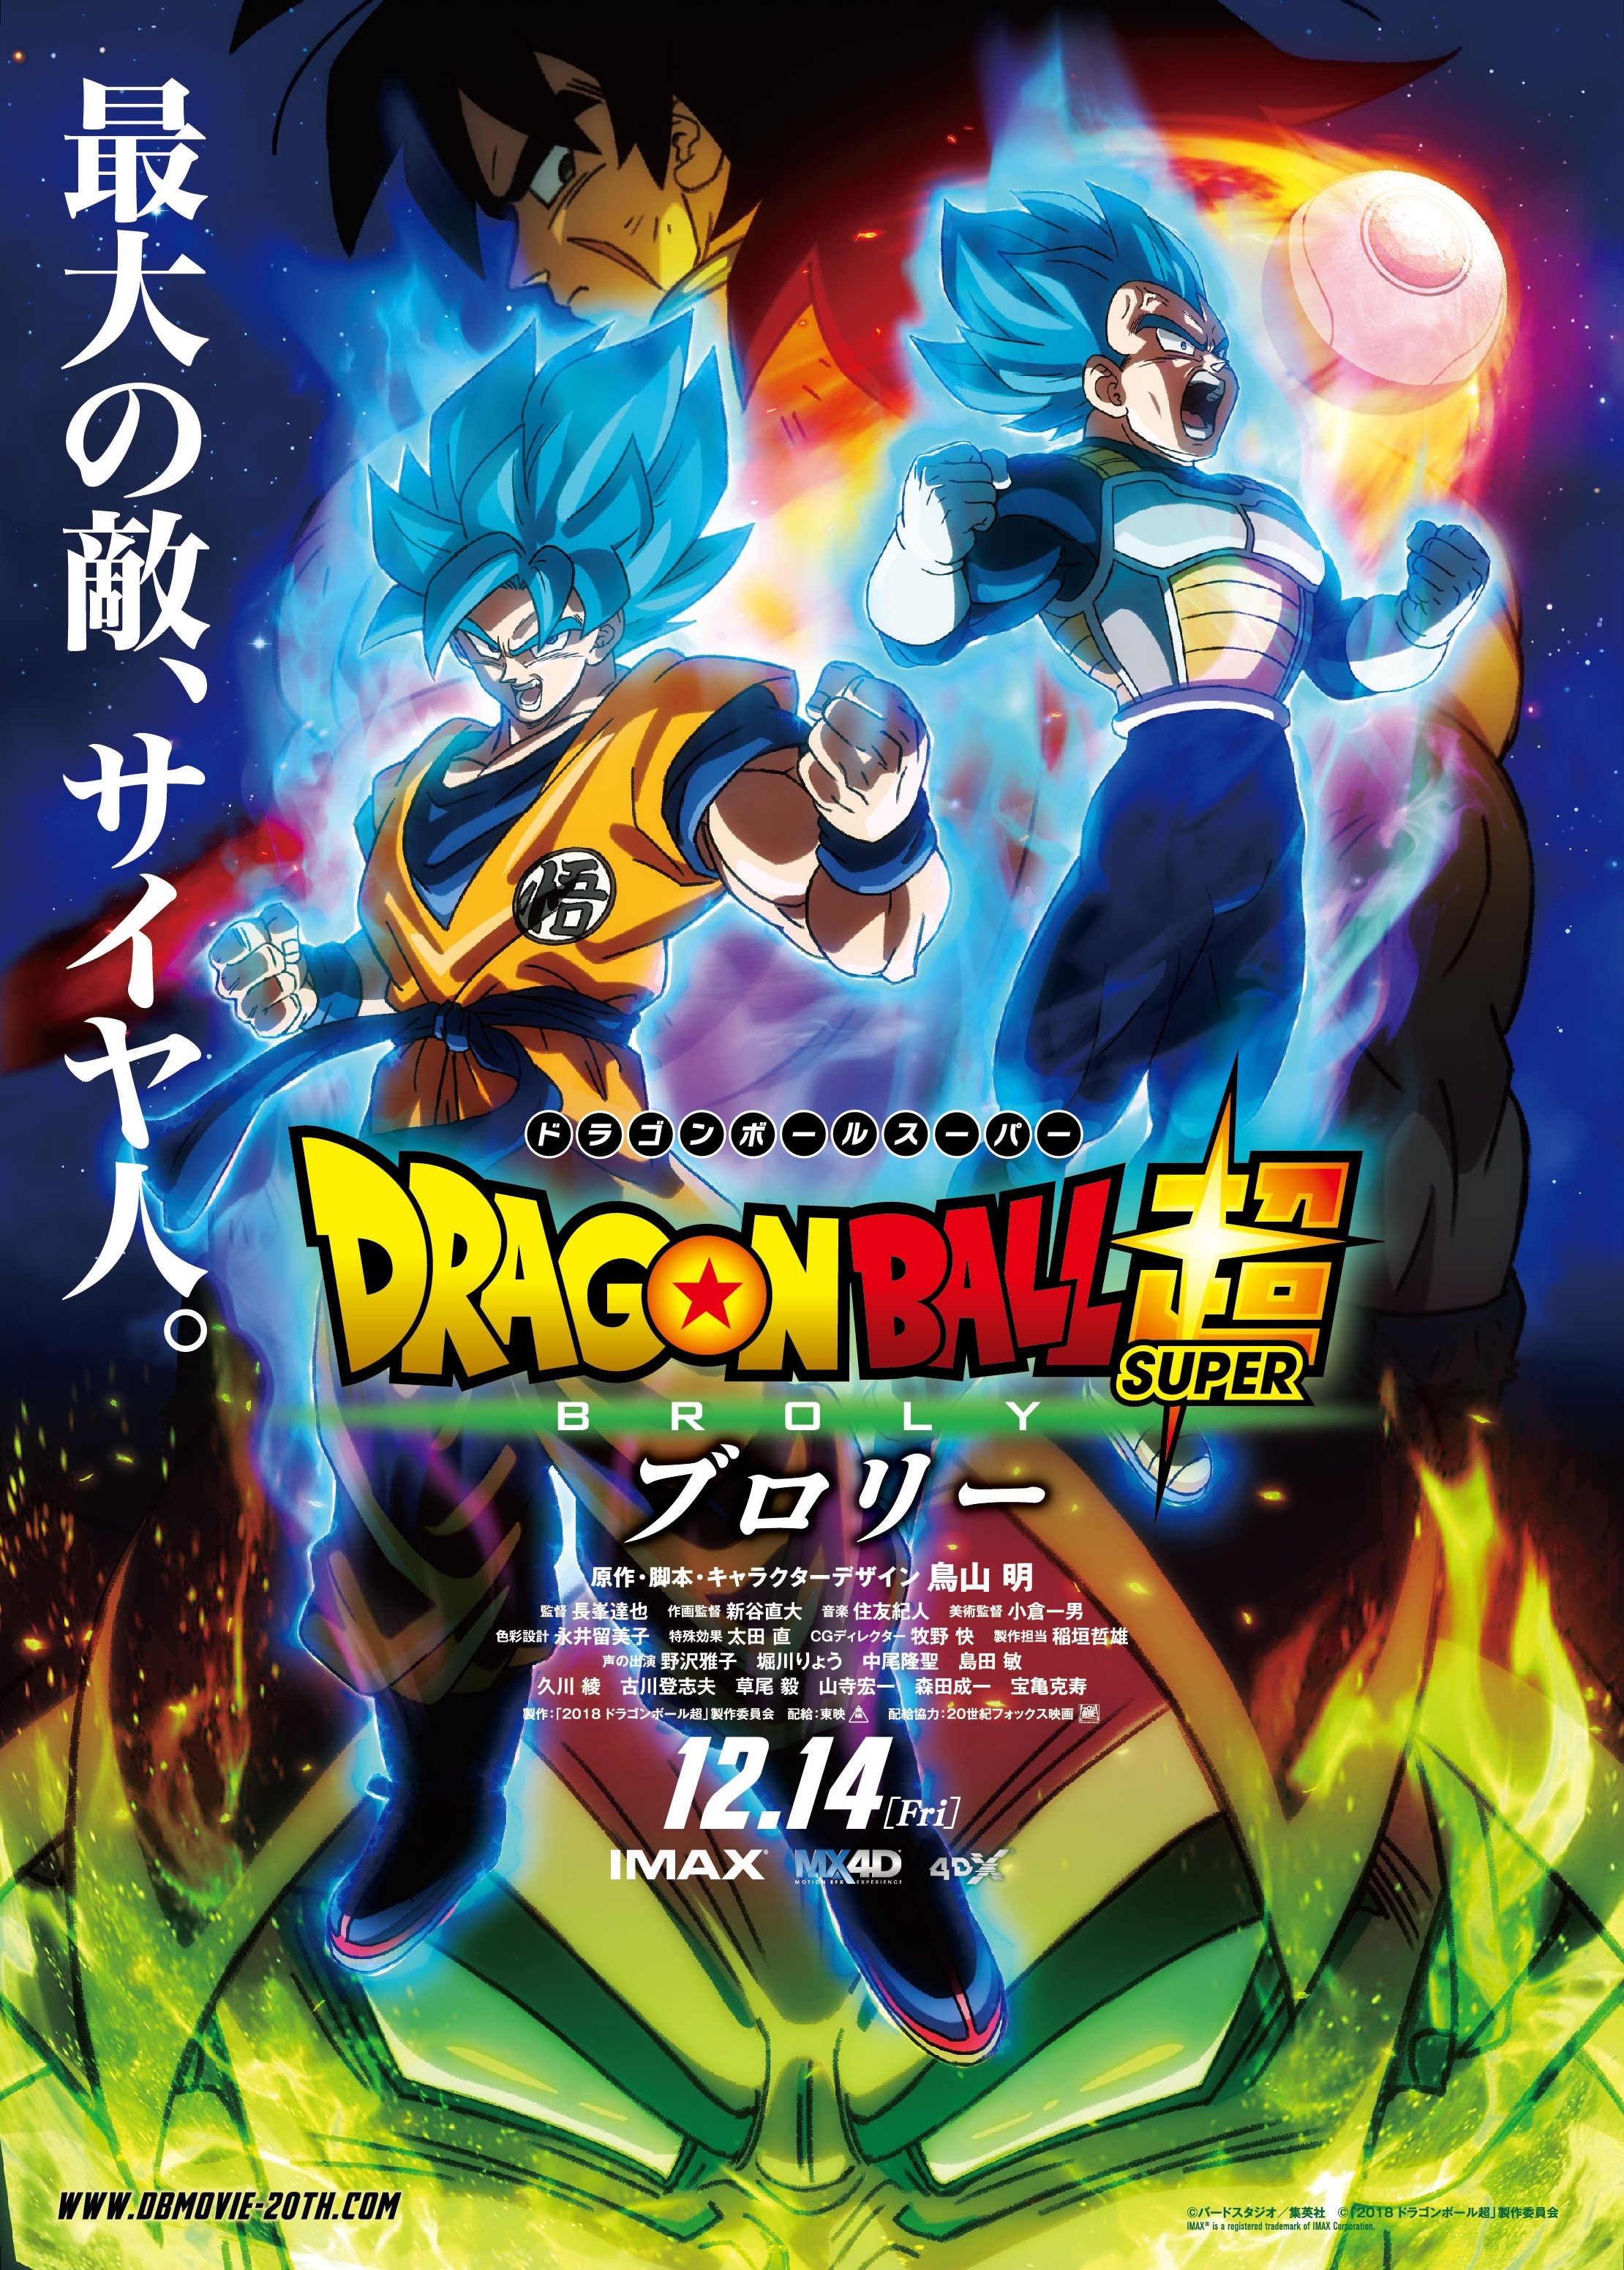 Dragon Ball Super Anime Return Set, New Movie in Pre-Production